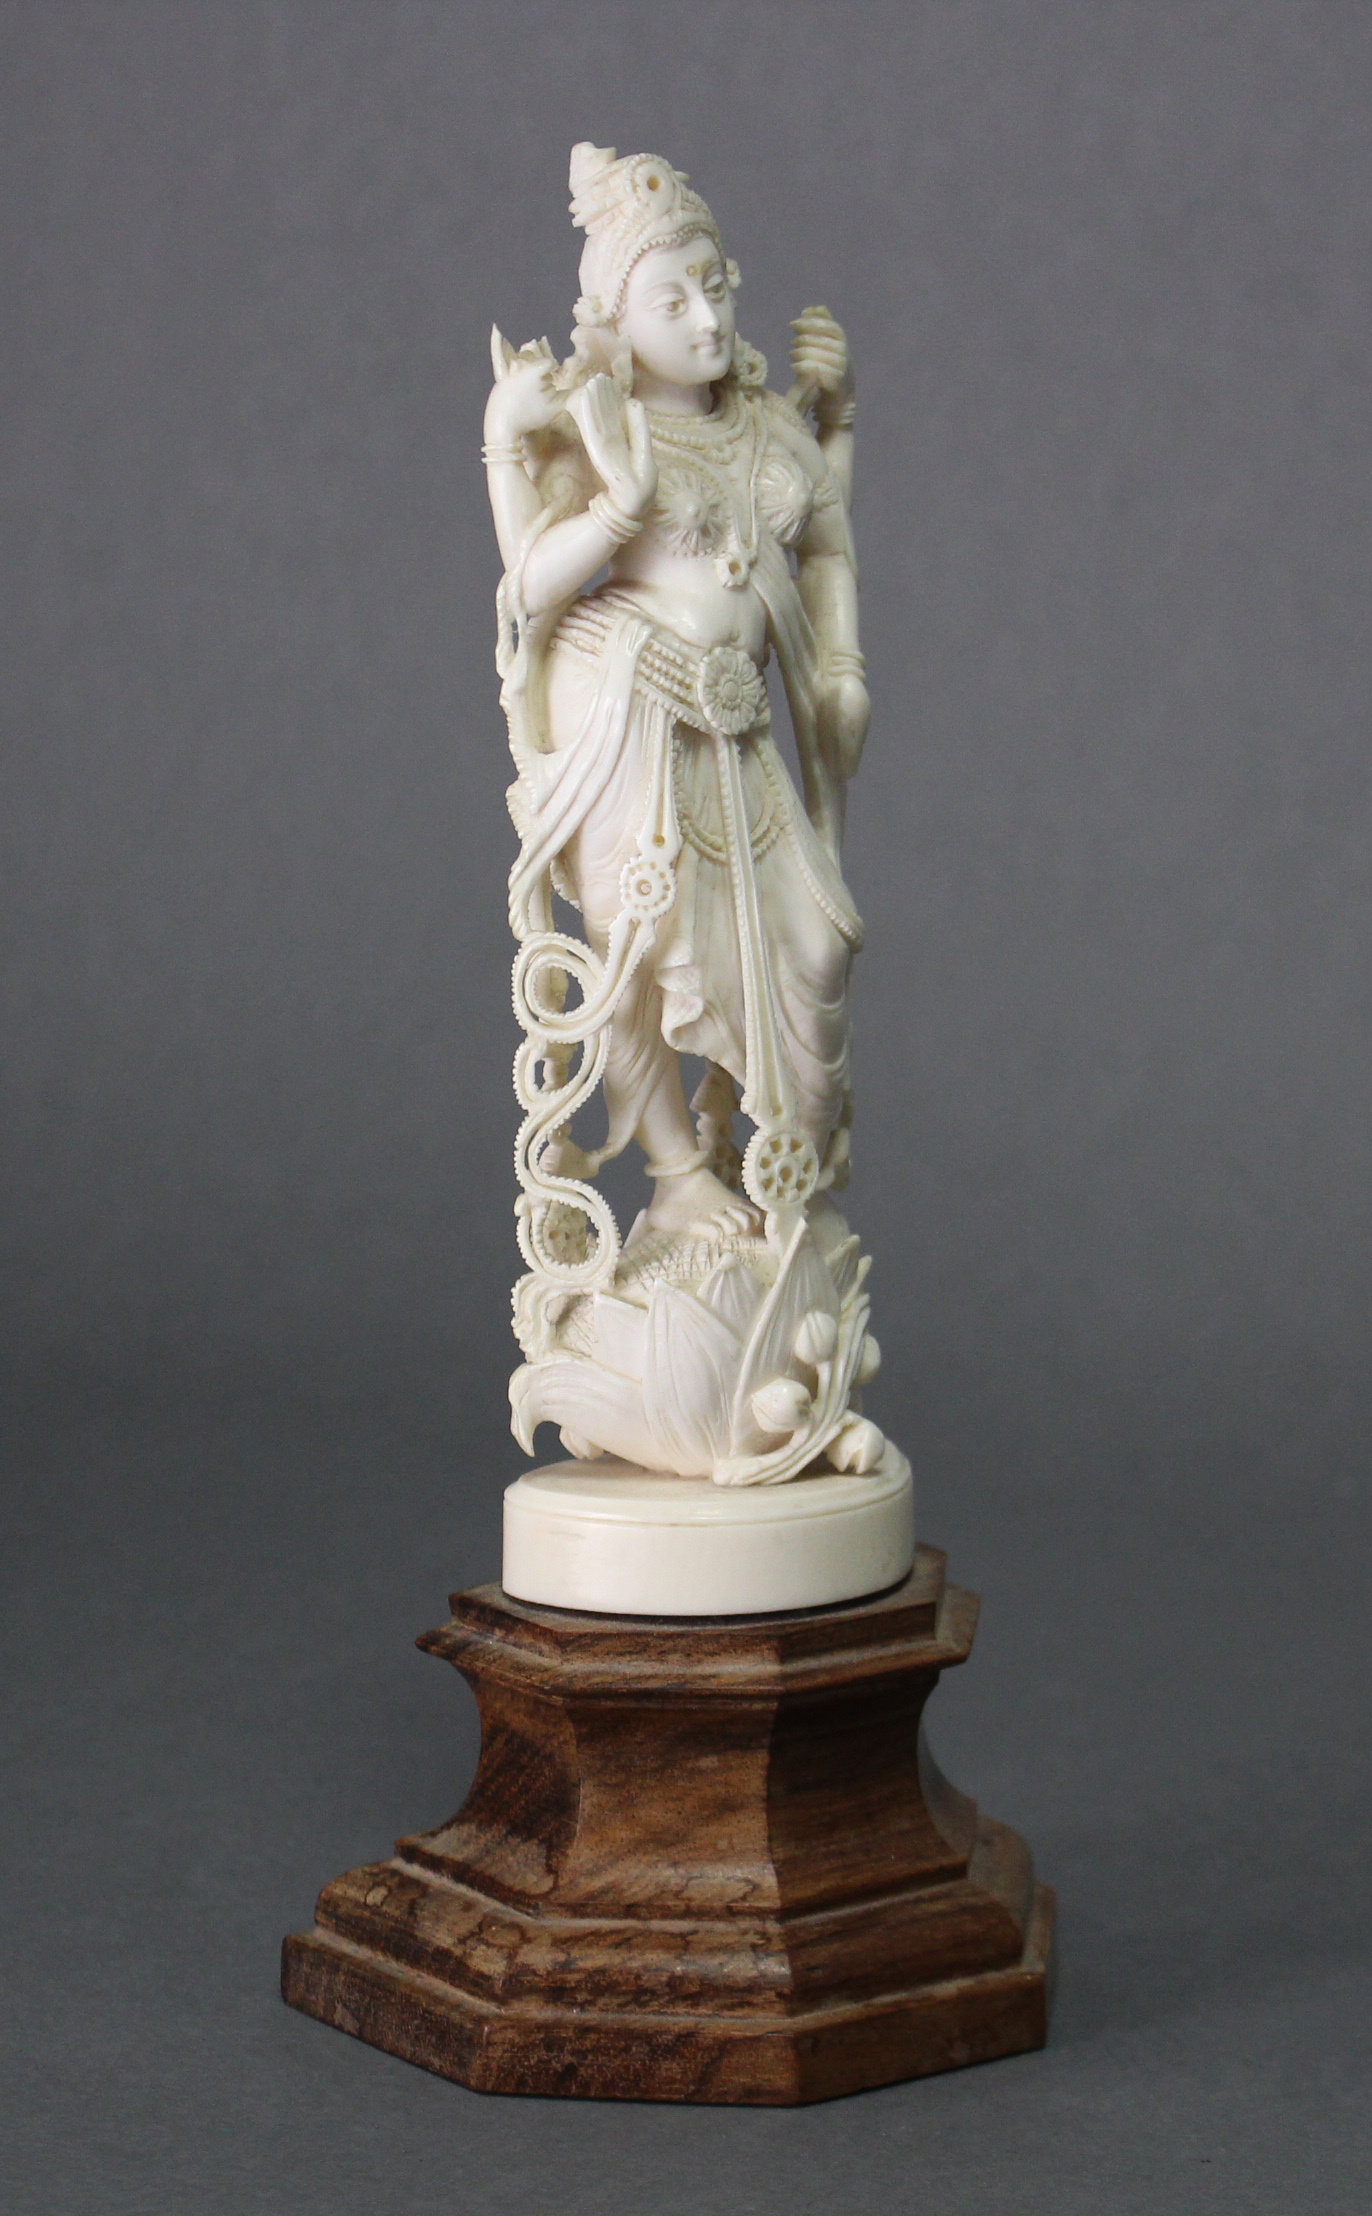 A 19th century ivory model of the goddess Laxmi, on wooden plinth base; 9“ high.